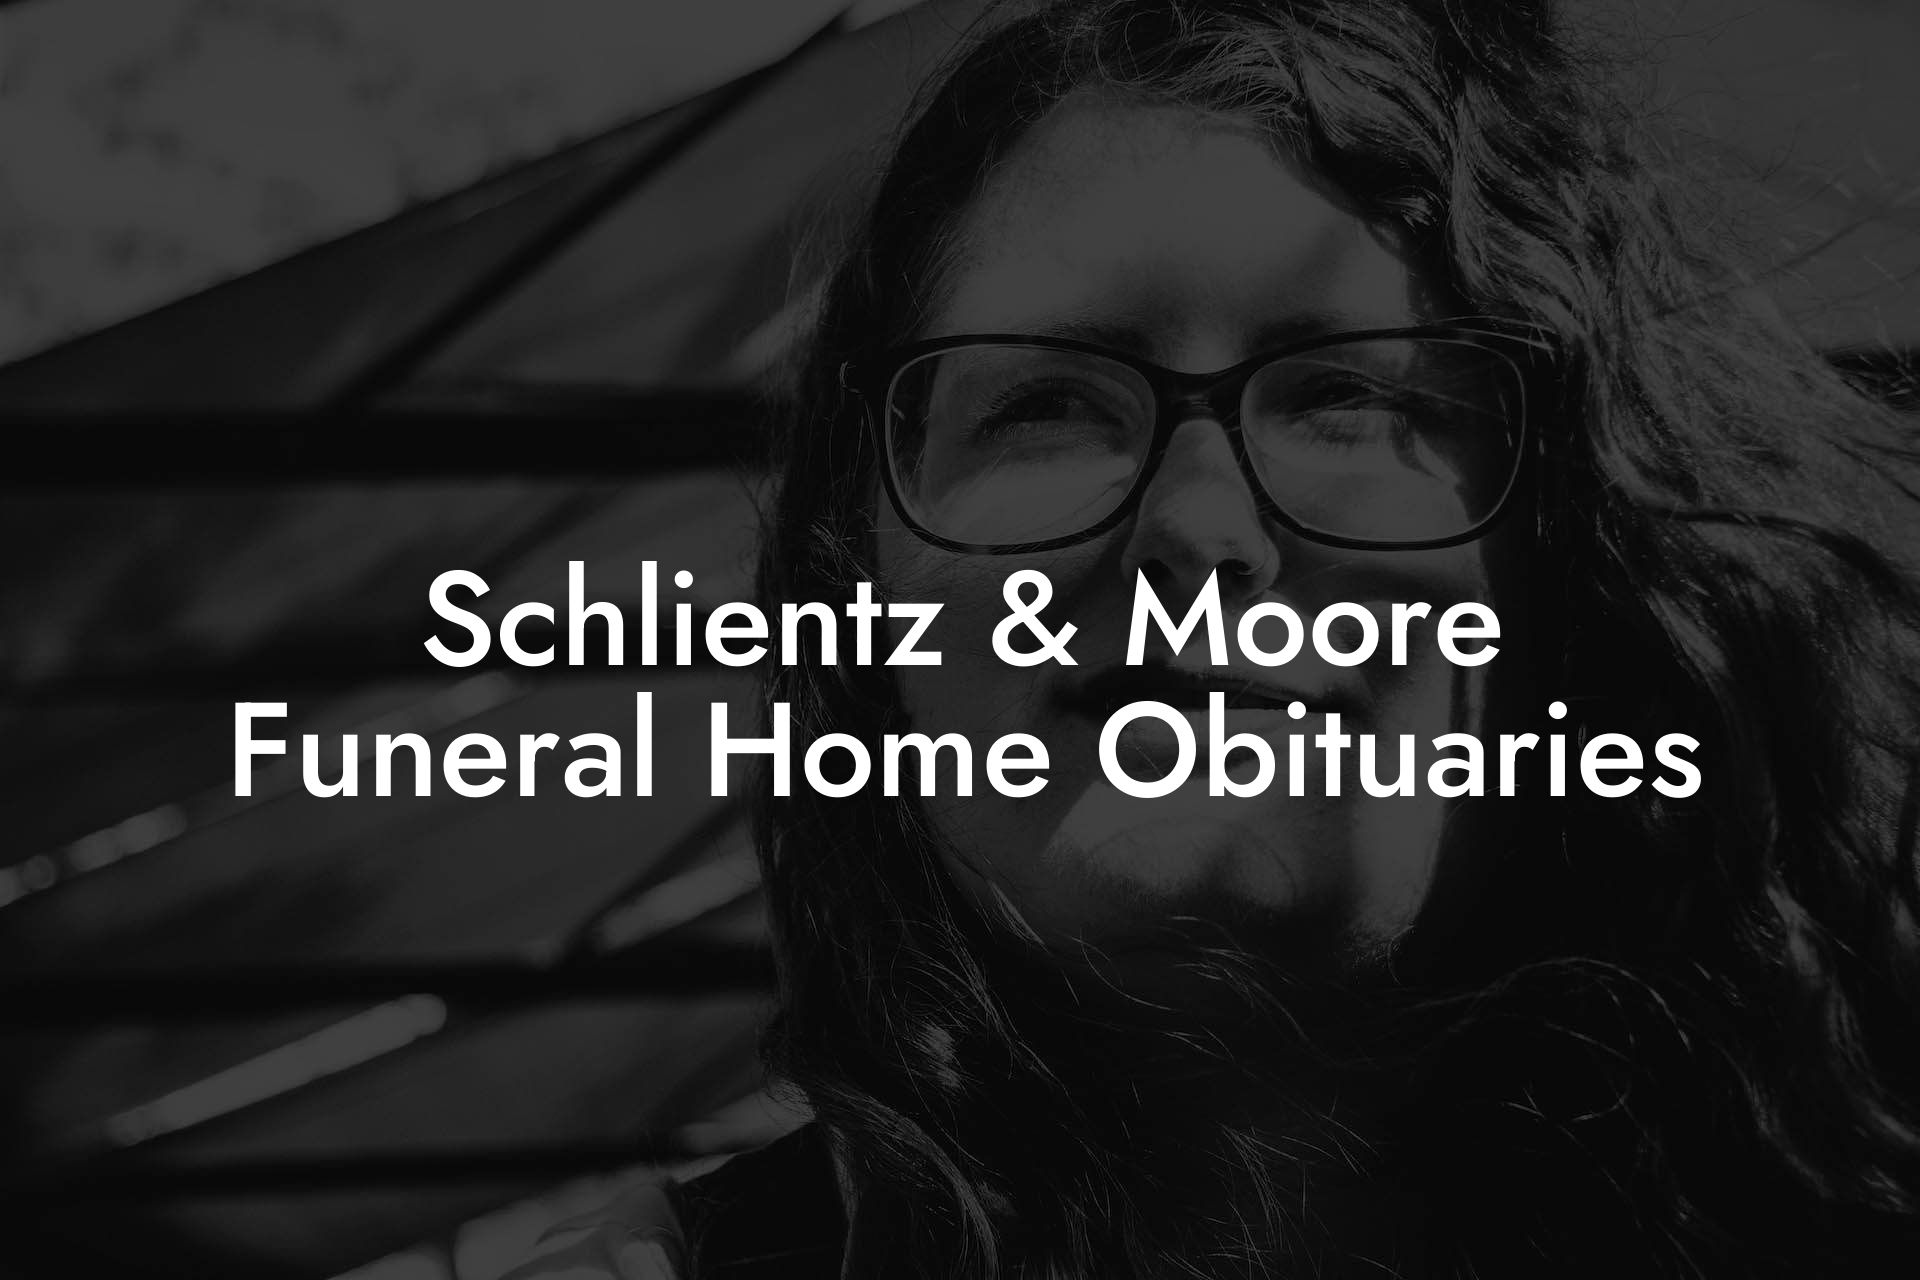 Schlientz & Moore Funeral Home Obituaries